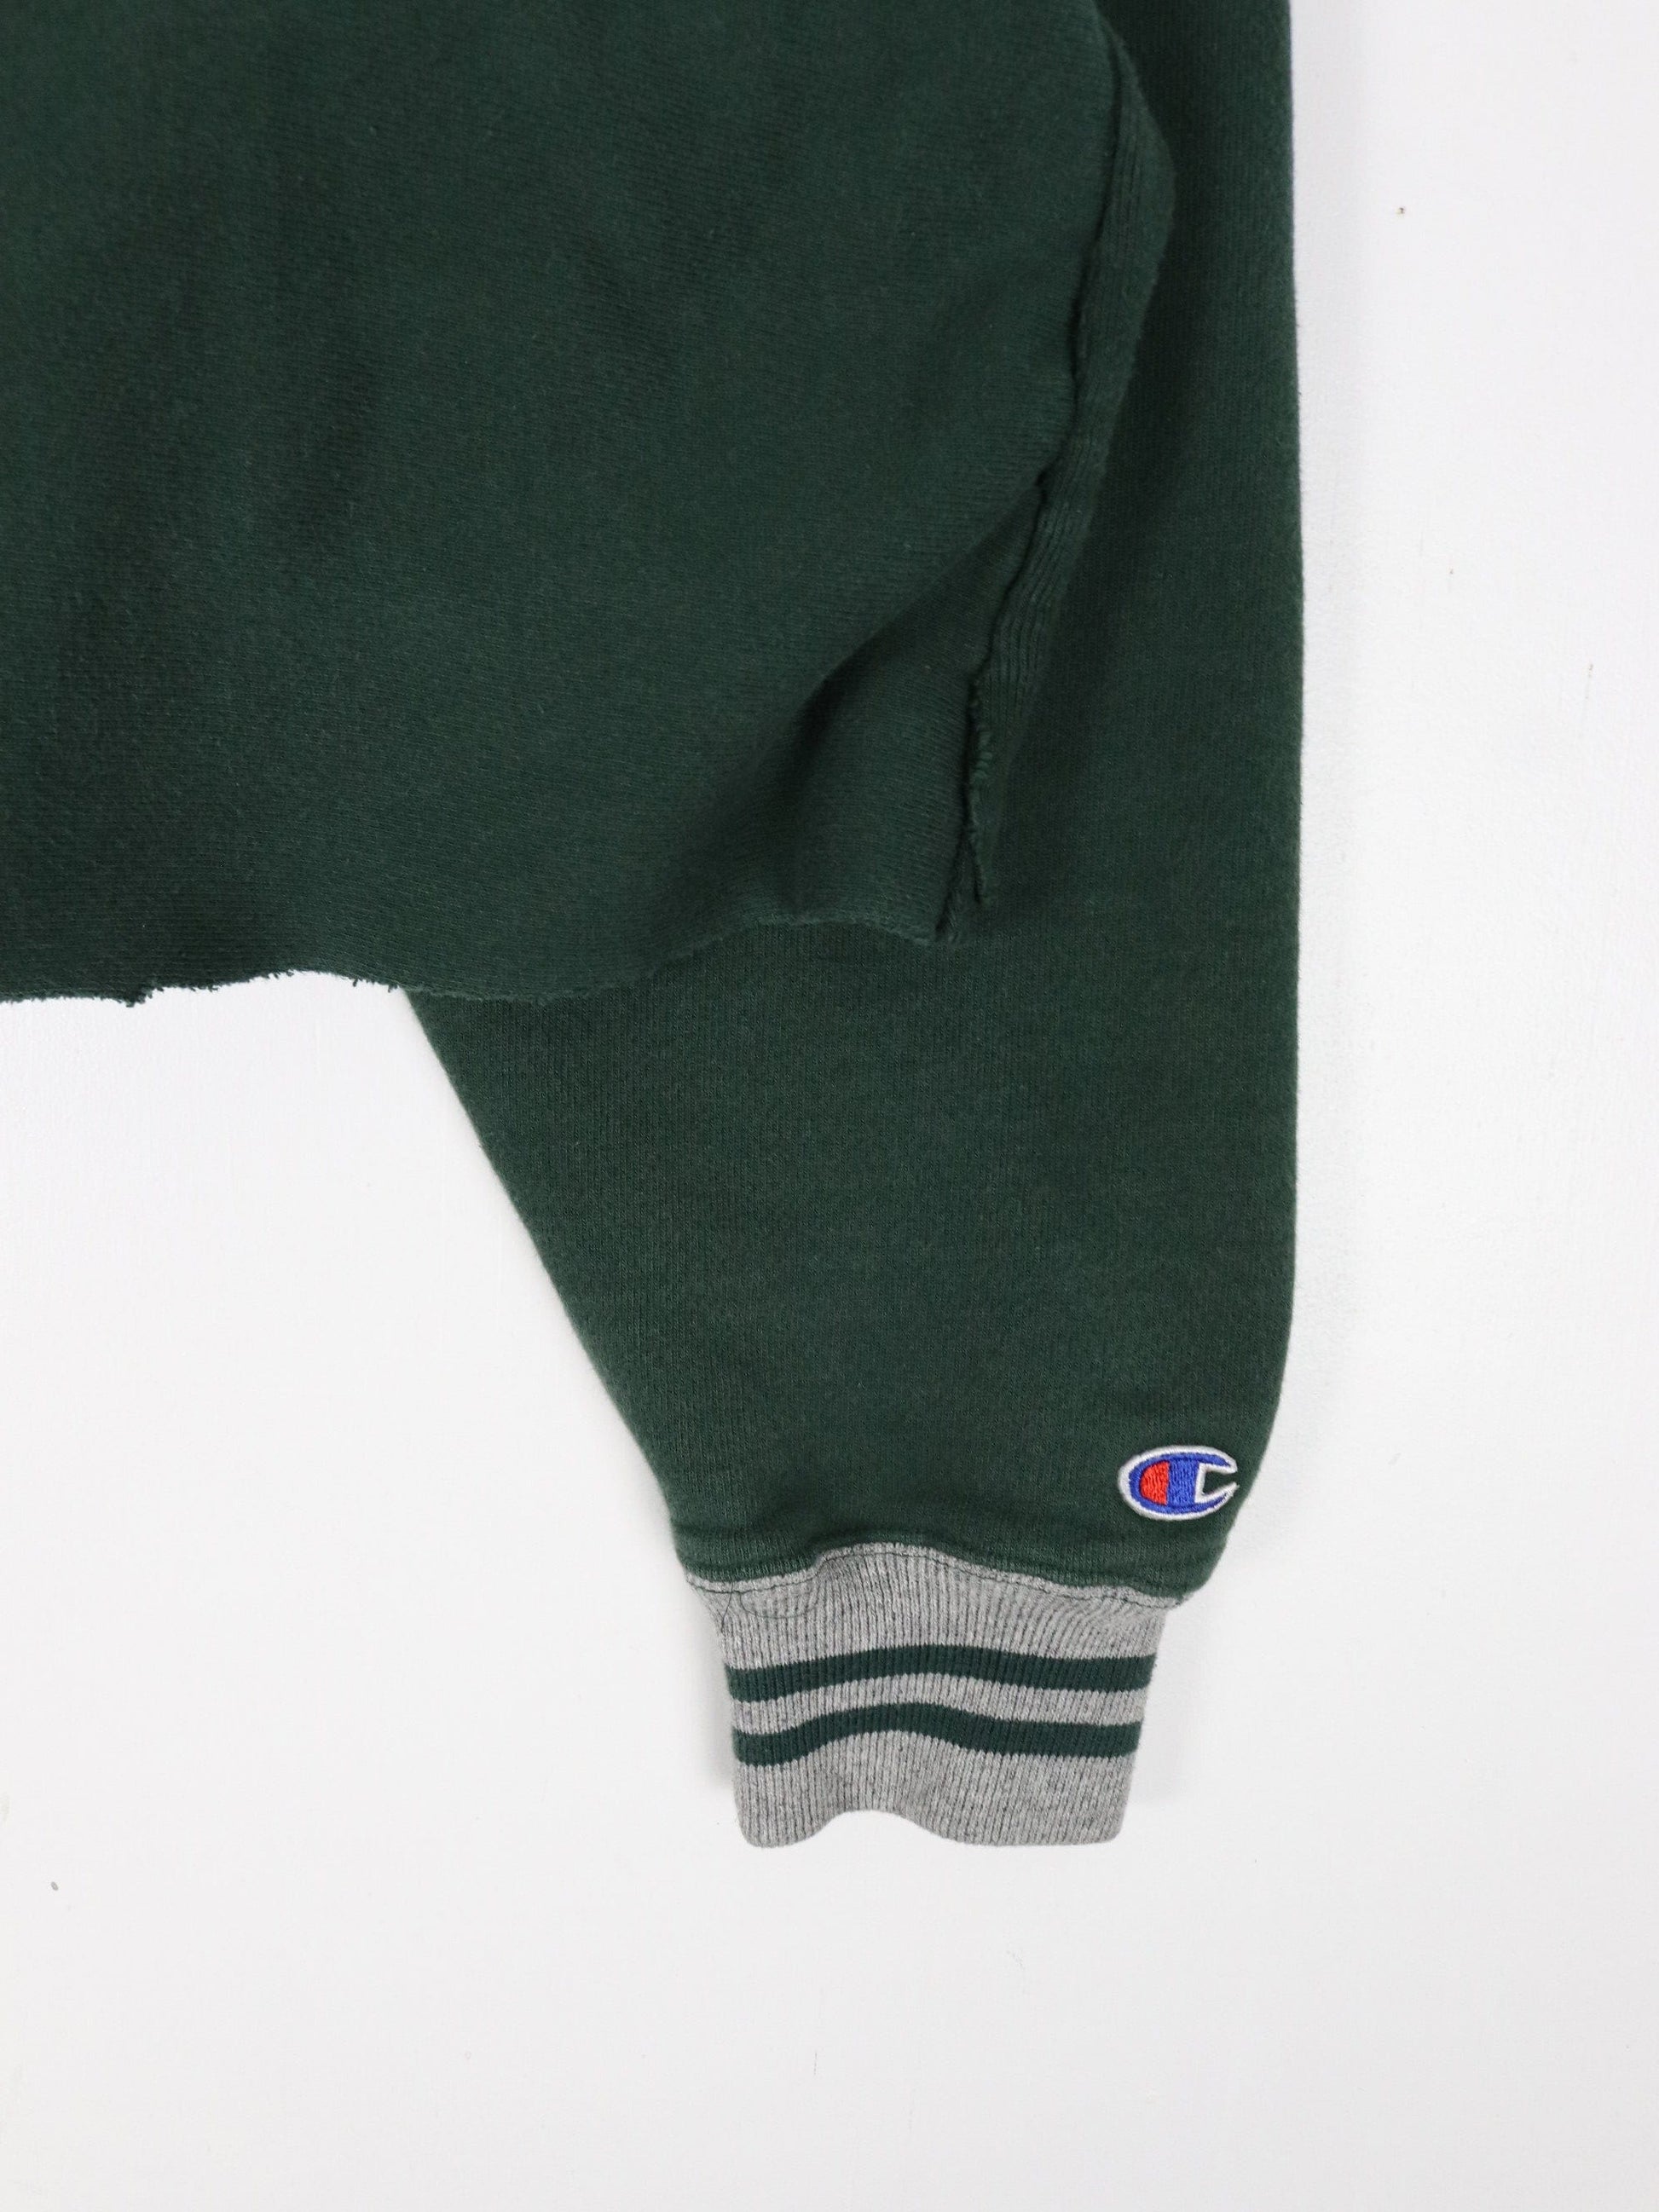 Champion Sweatshirts & Hoodies Vintage Champion Sweatshirt Fits Adult Cropped XL Green Reverse Weave 90s